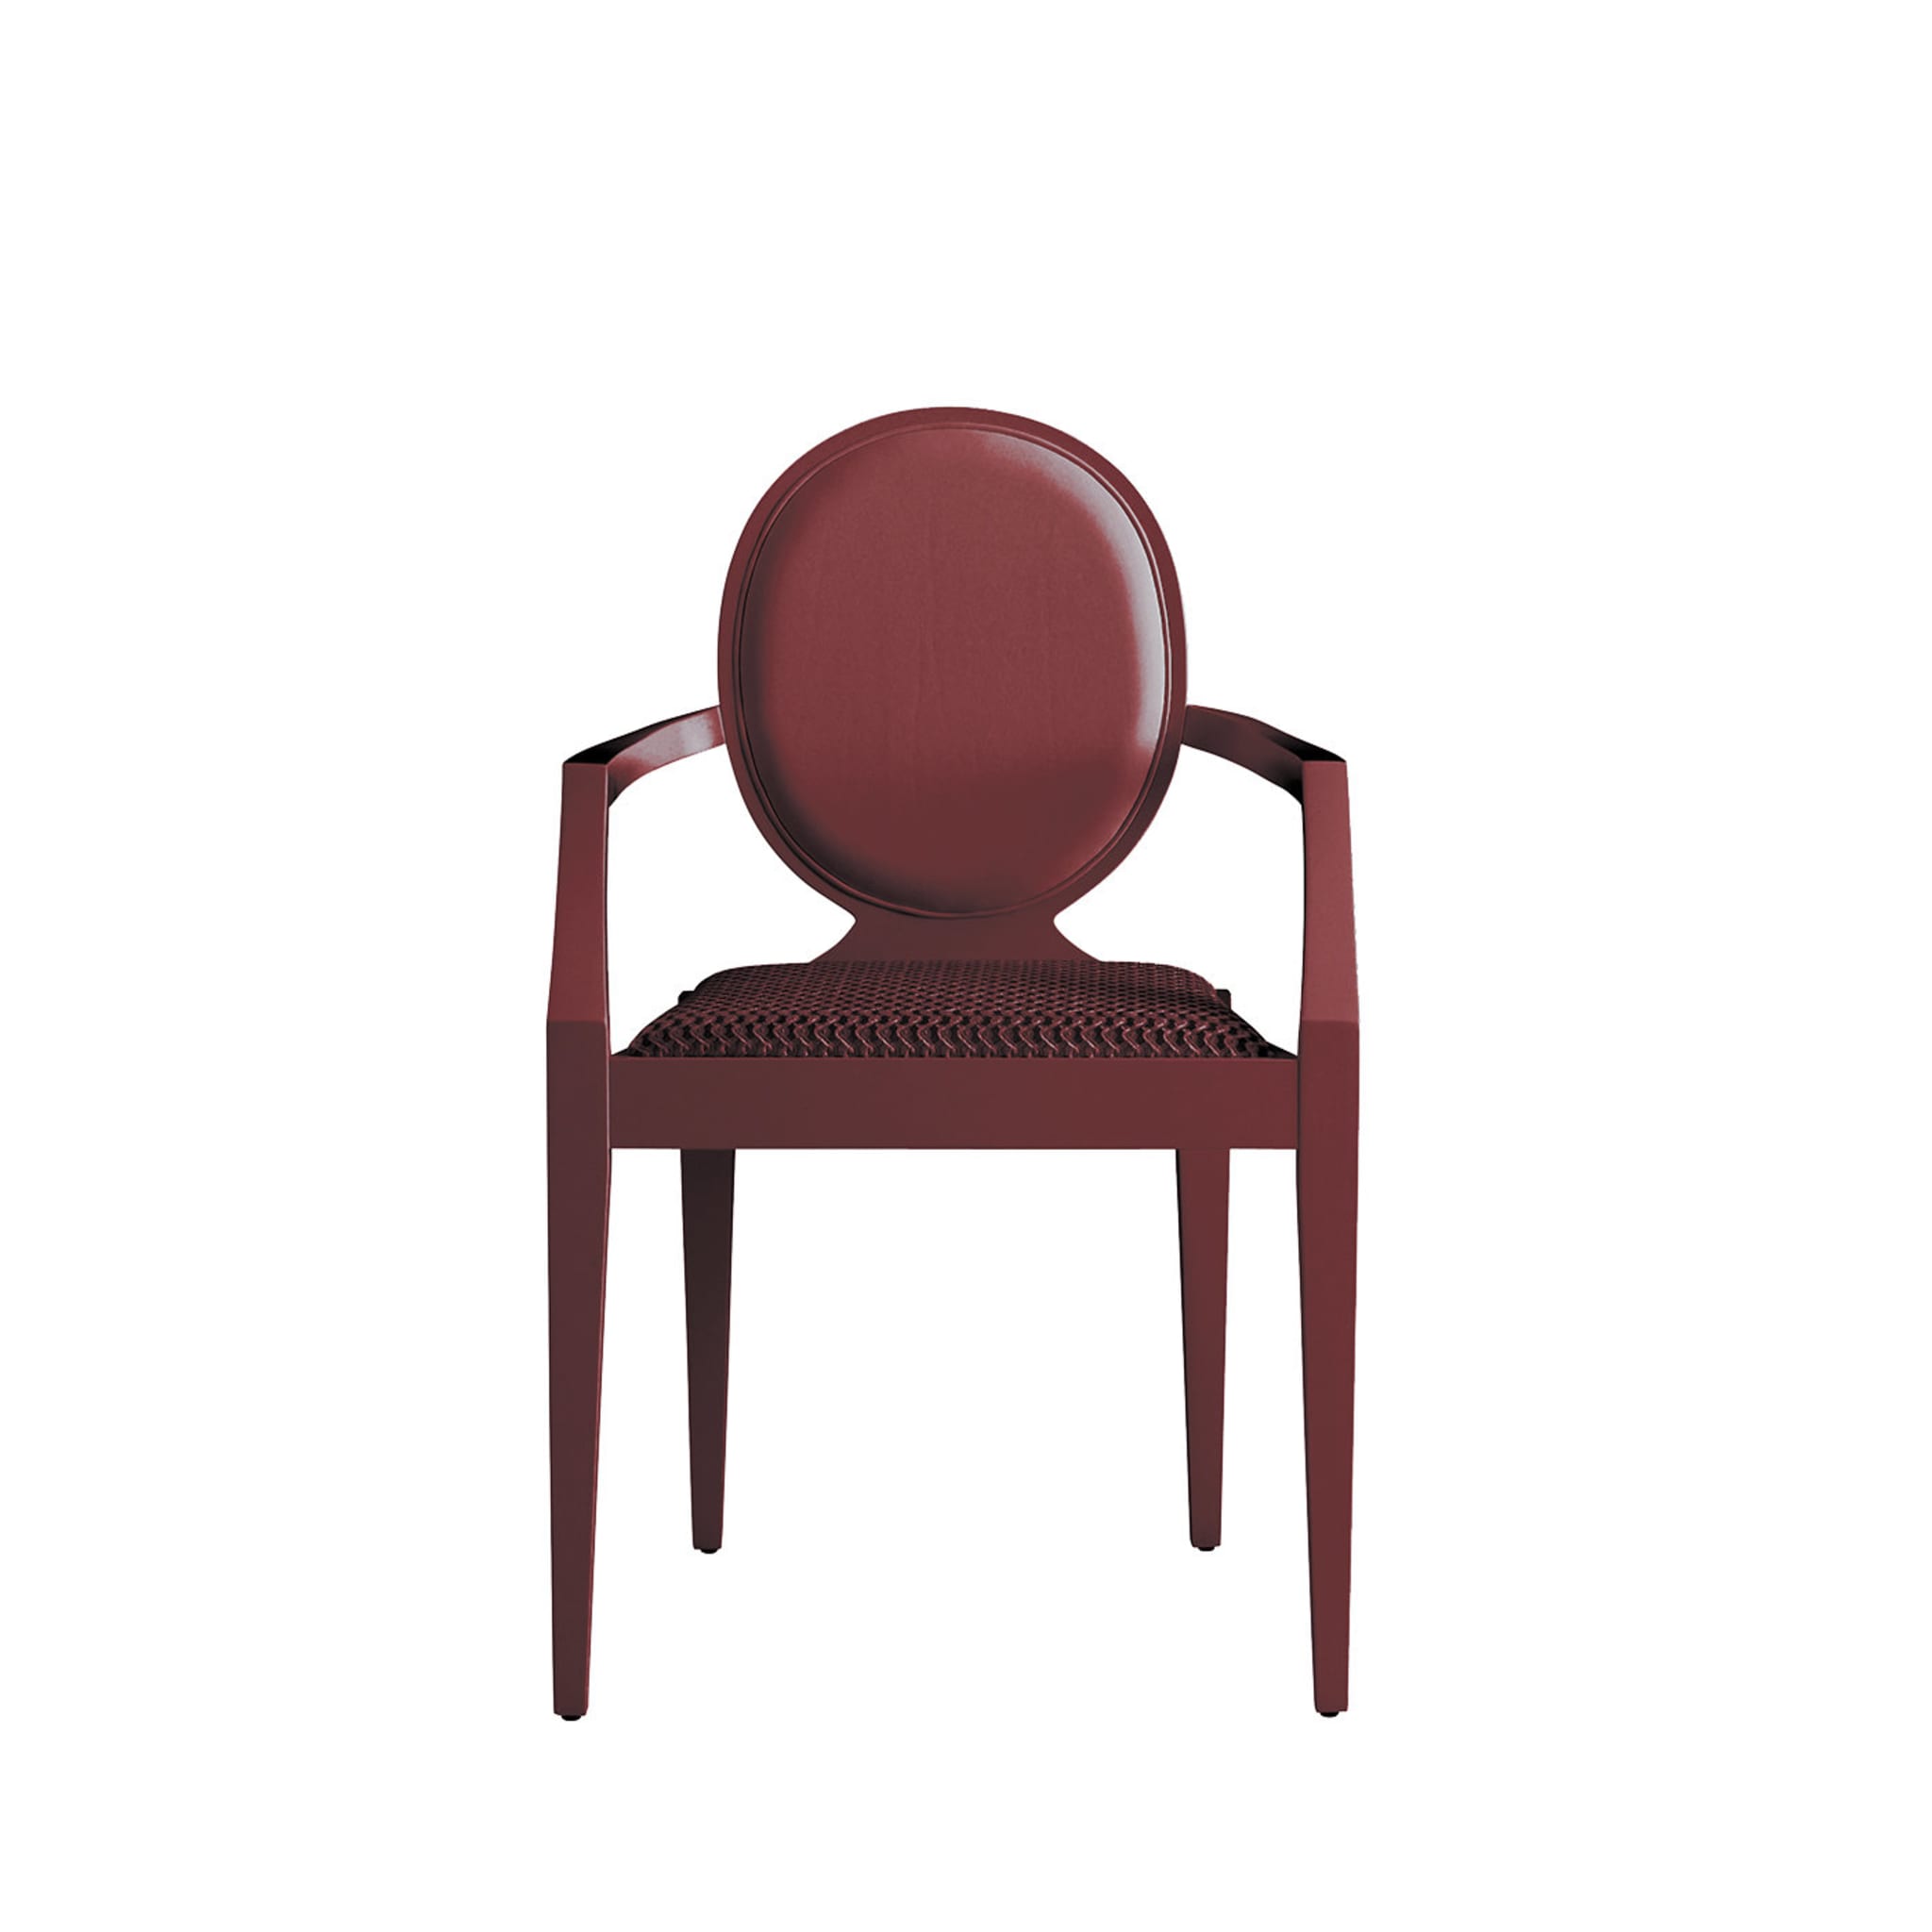 Positano Chair - Main view